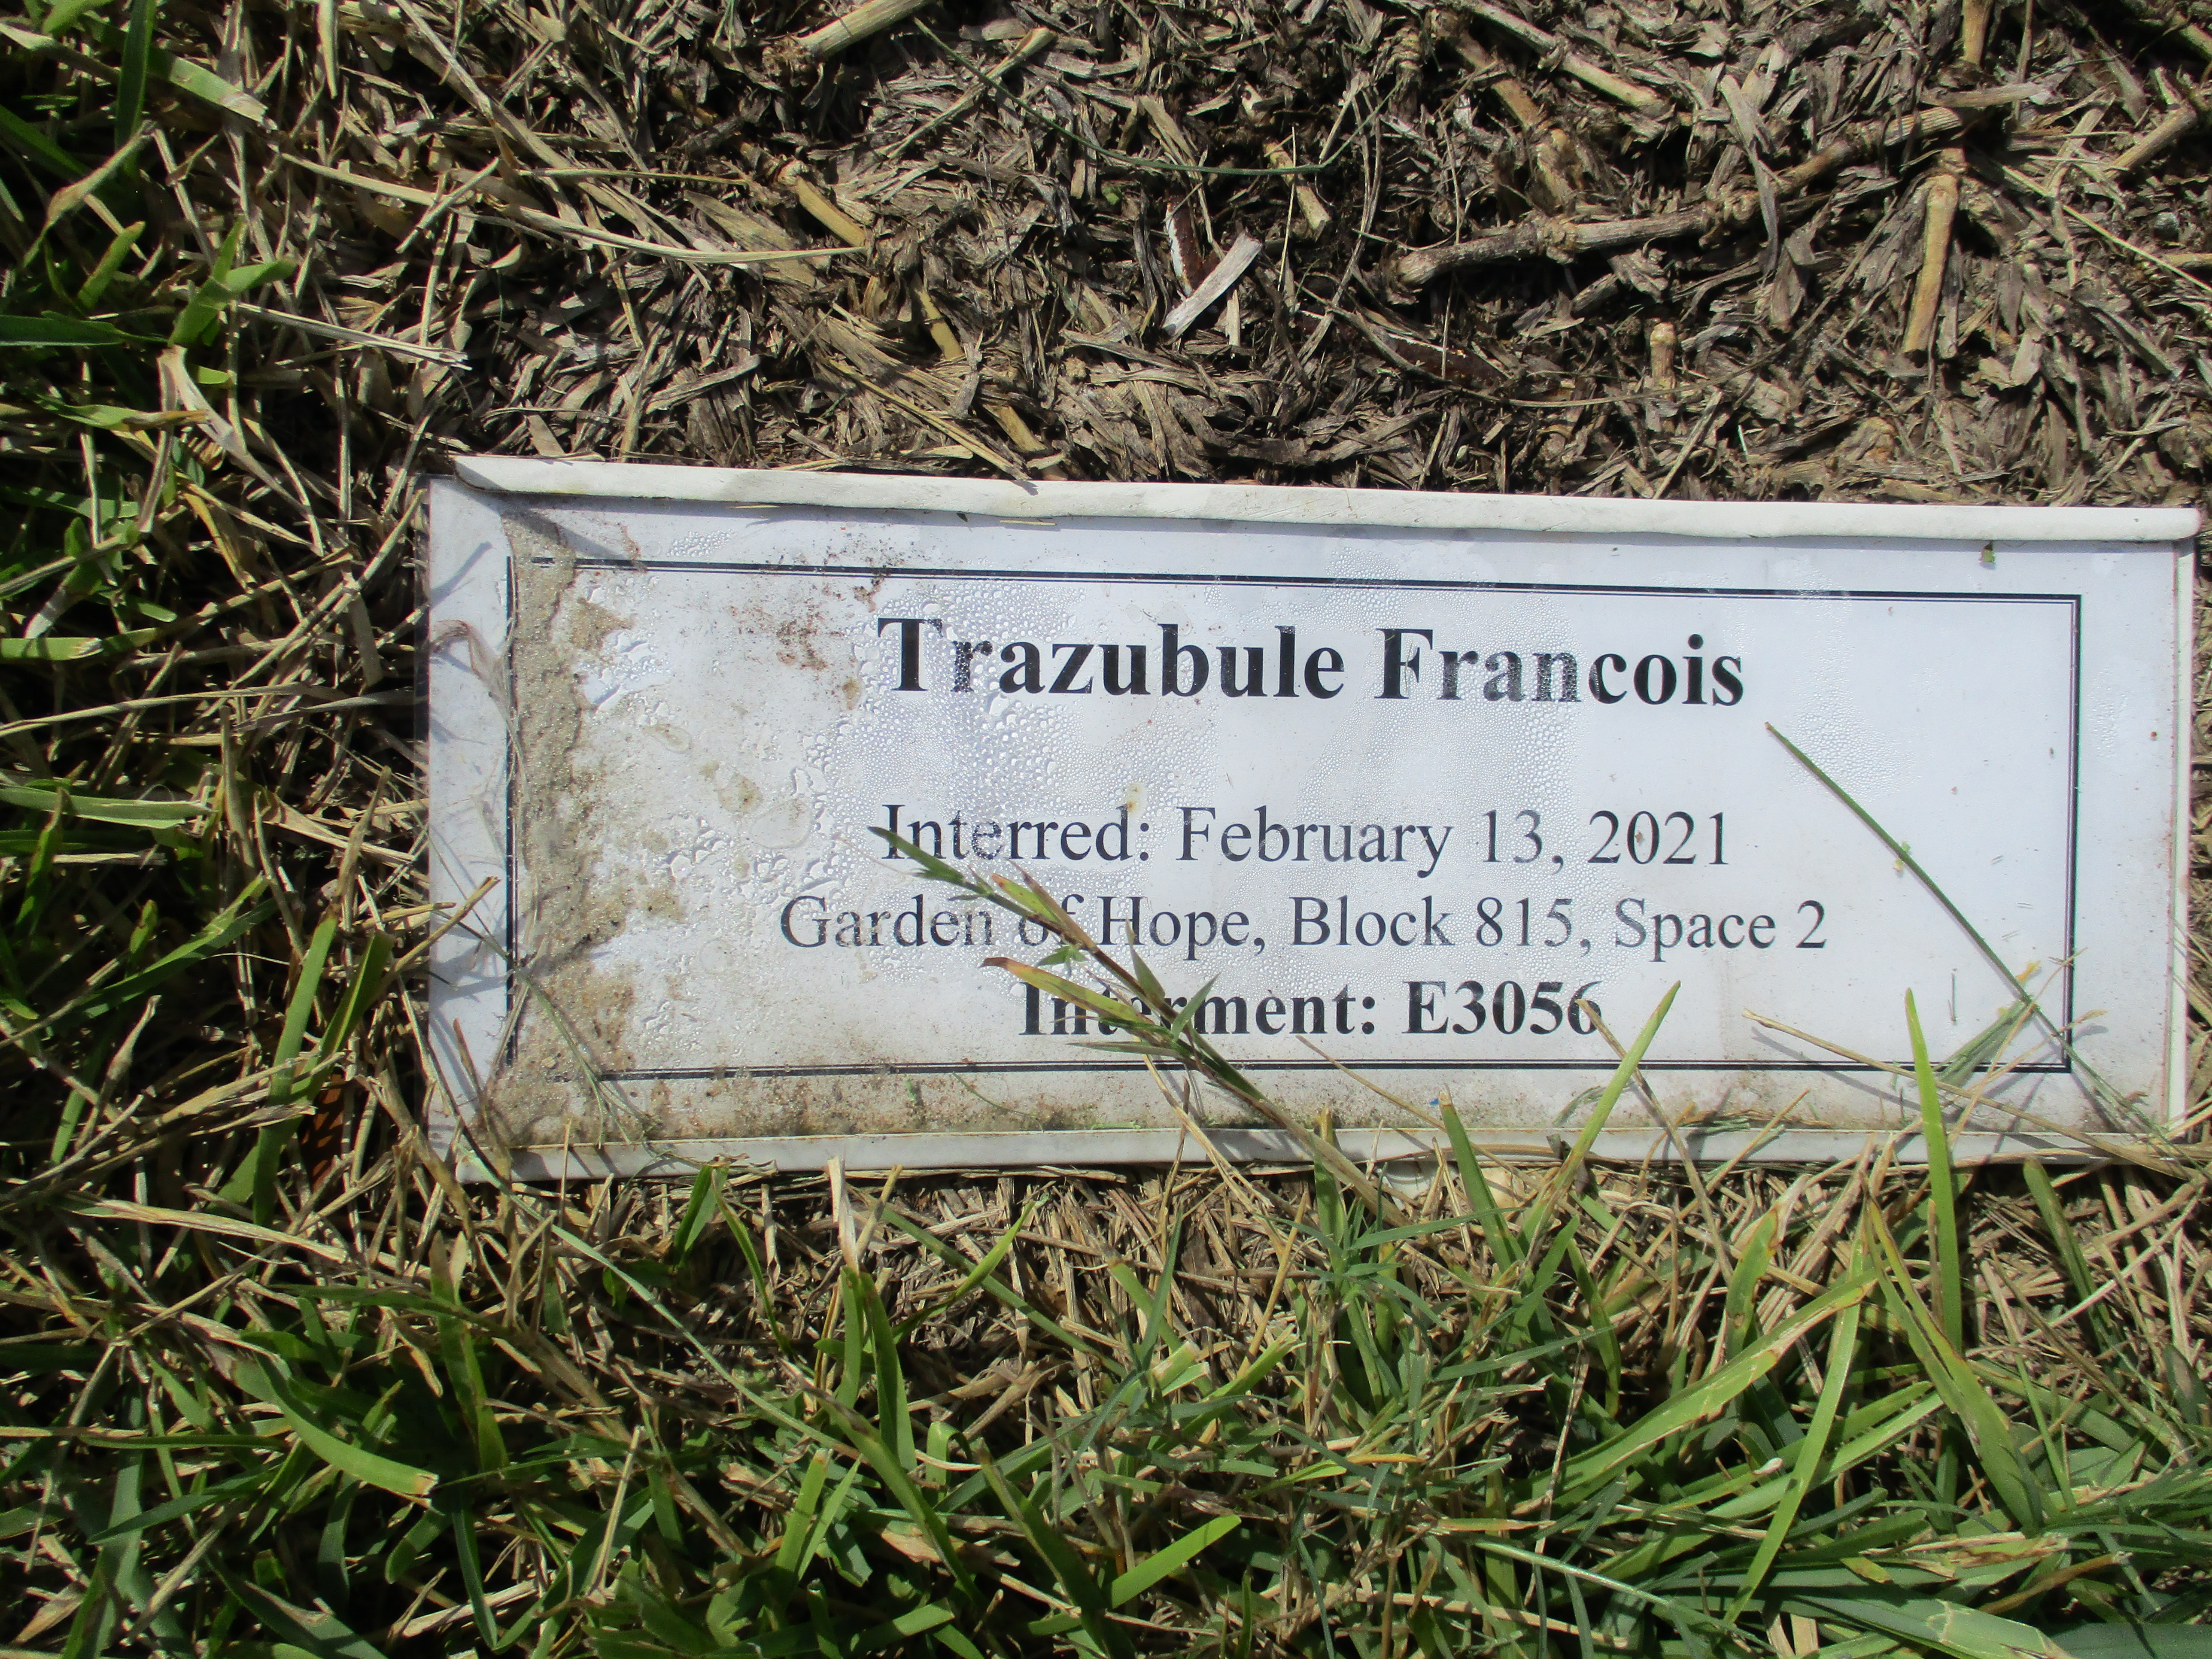 Trazubule Francois